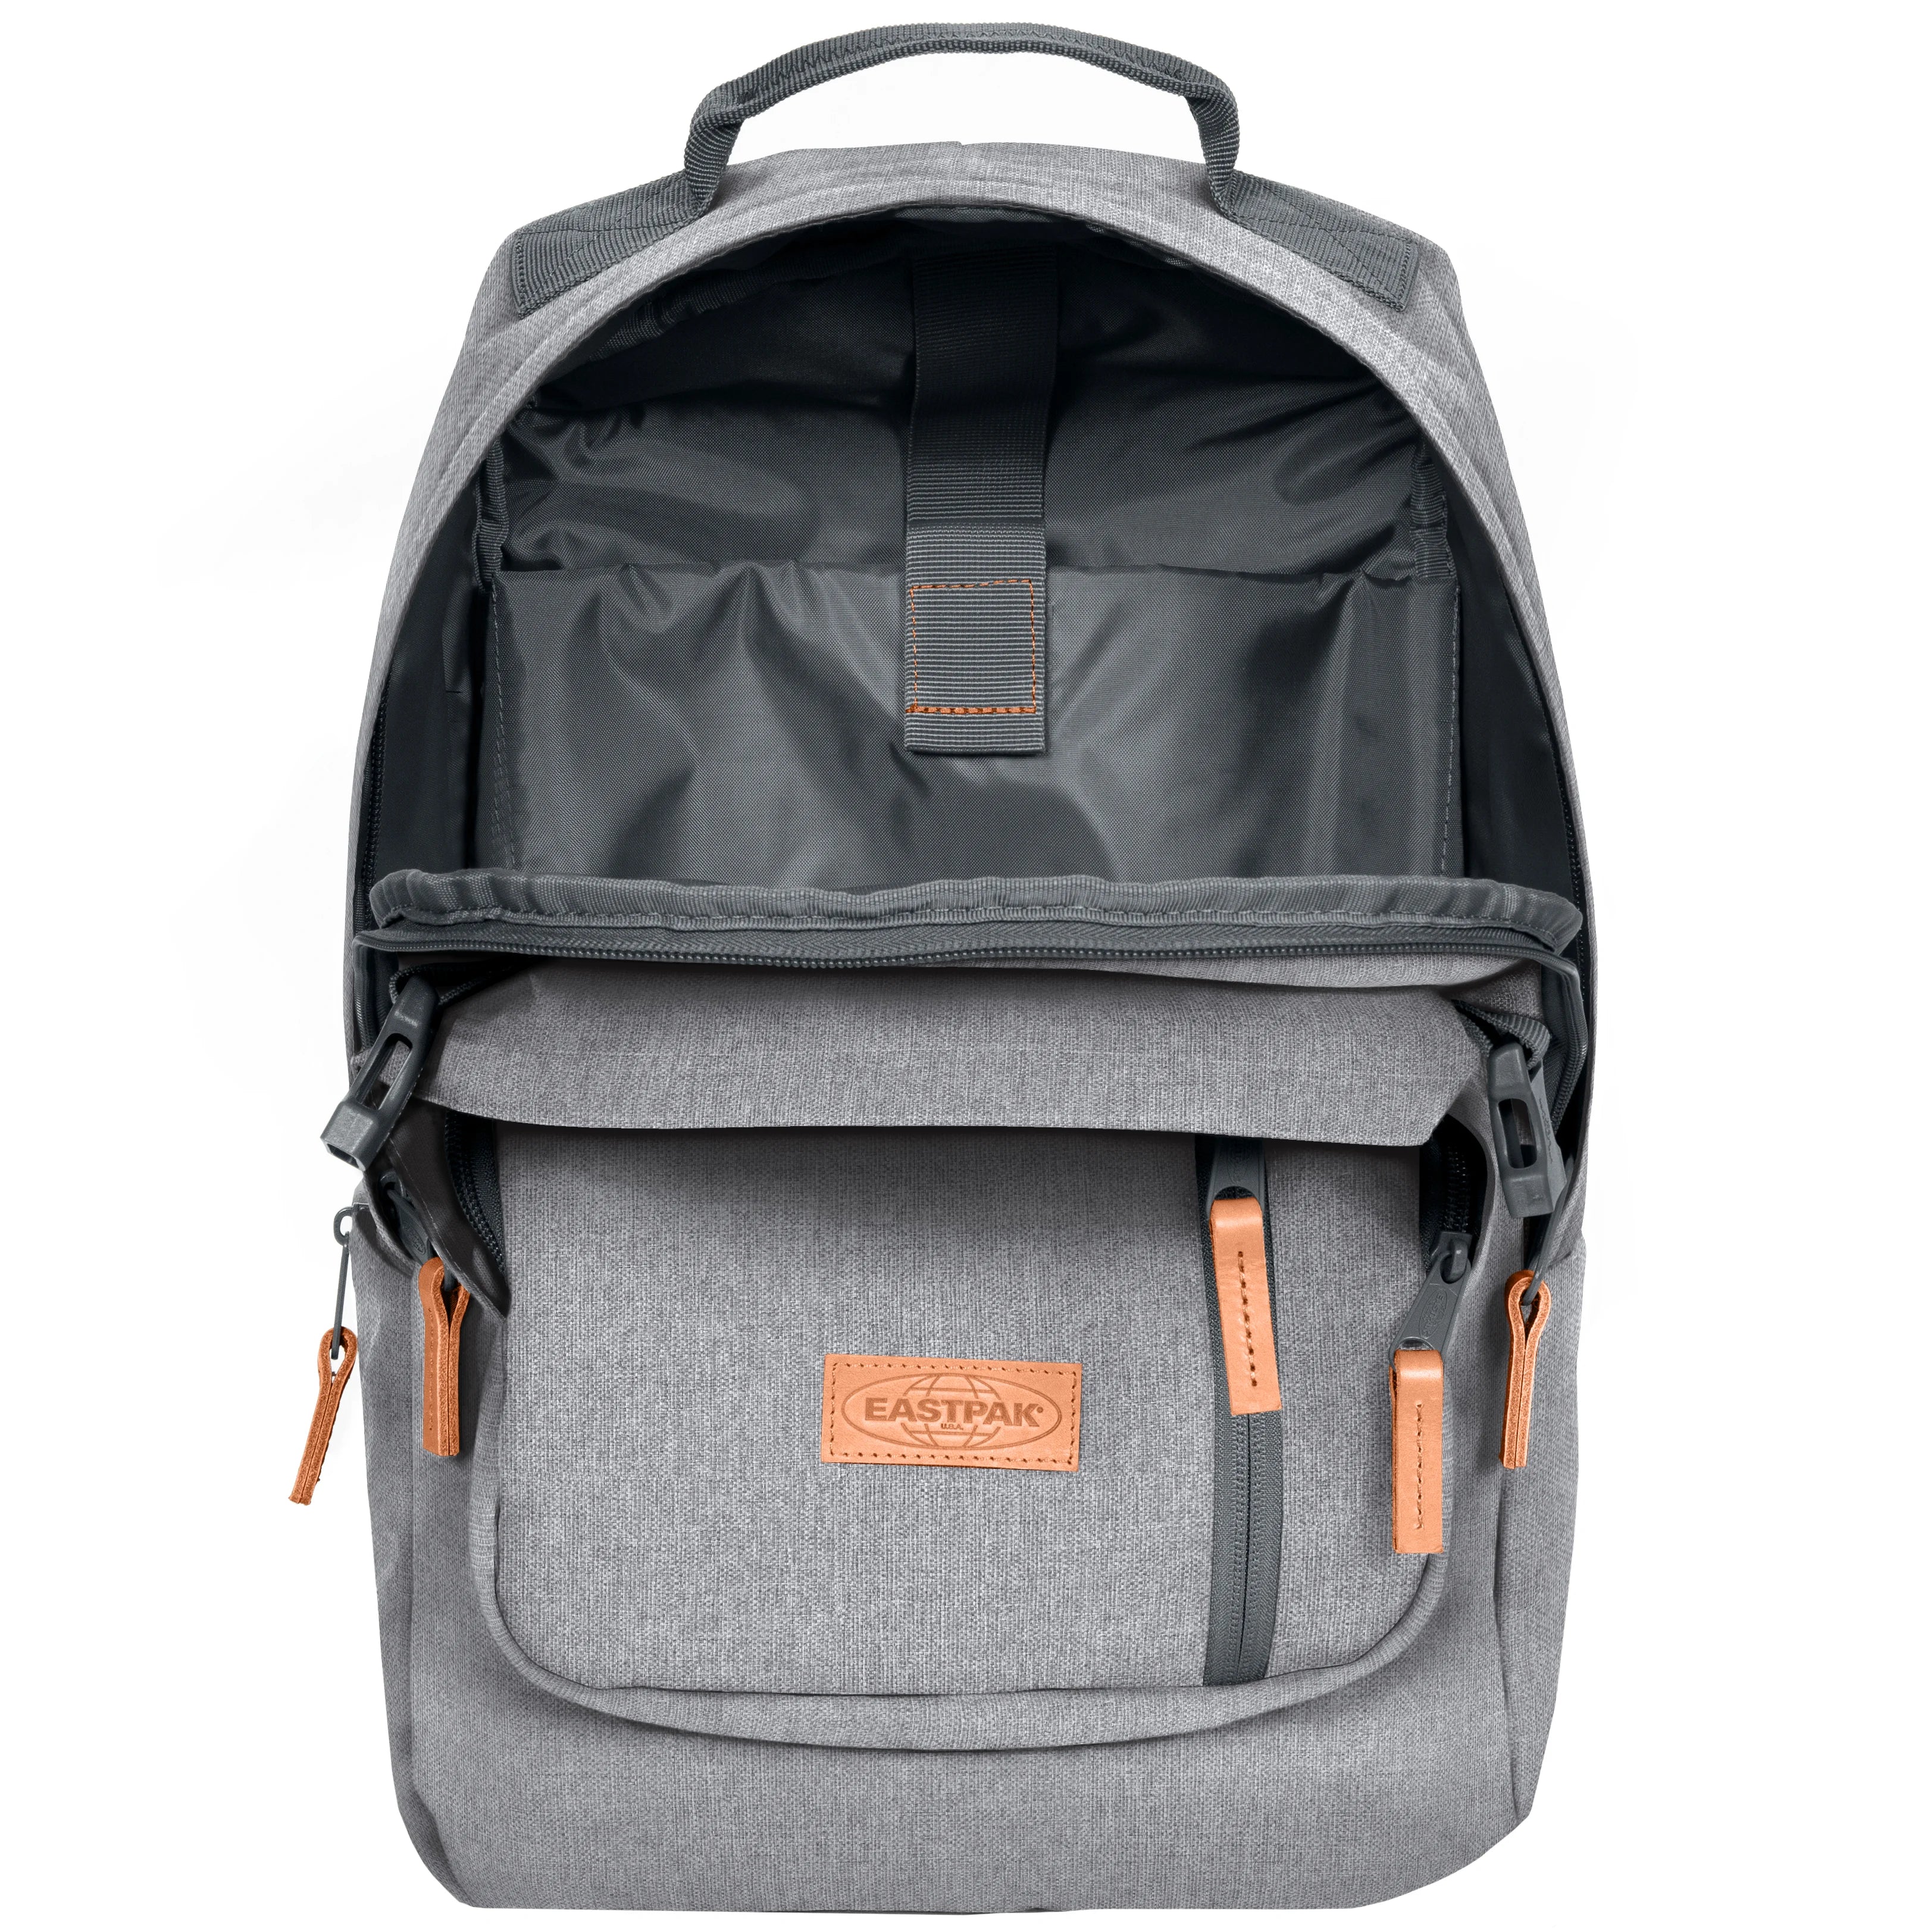 Eastpak Authentic Smallker Laptop Backpack 45 cm - CS Mono Black2